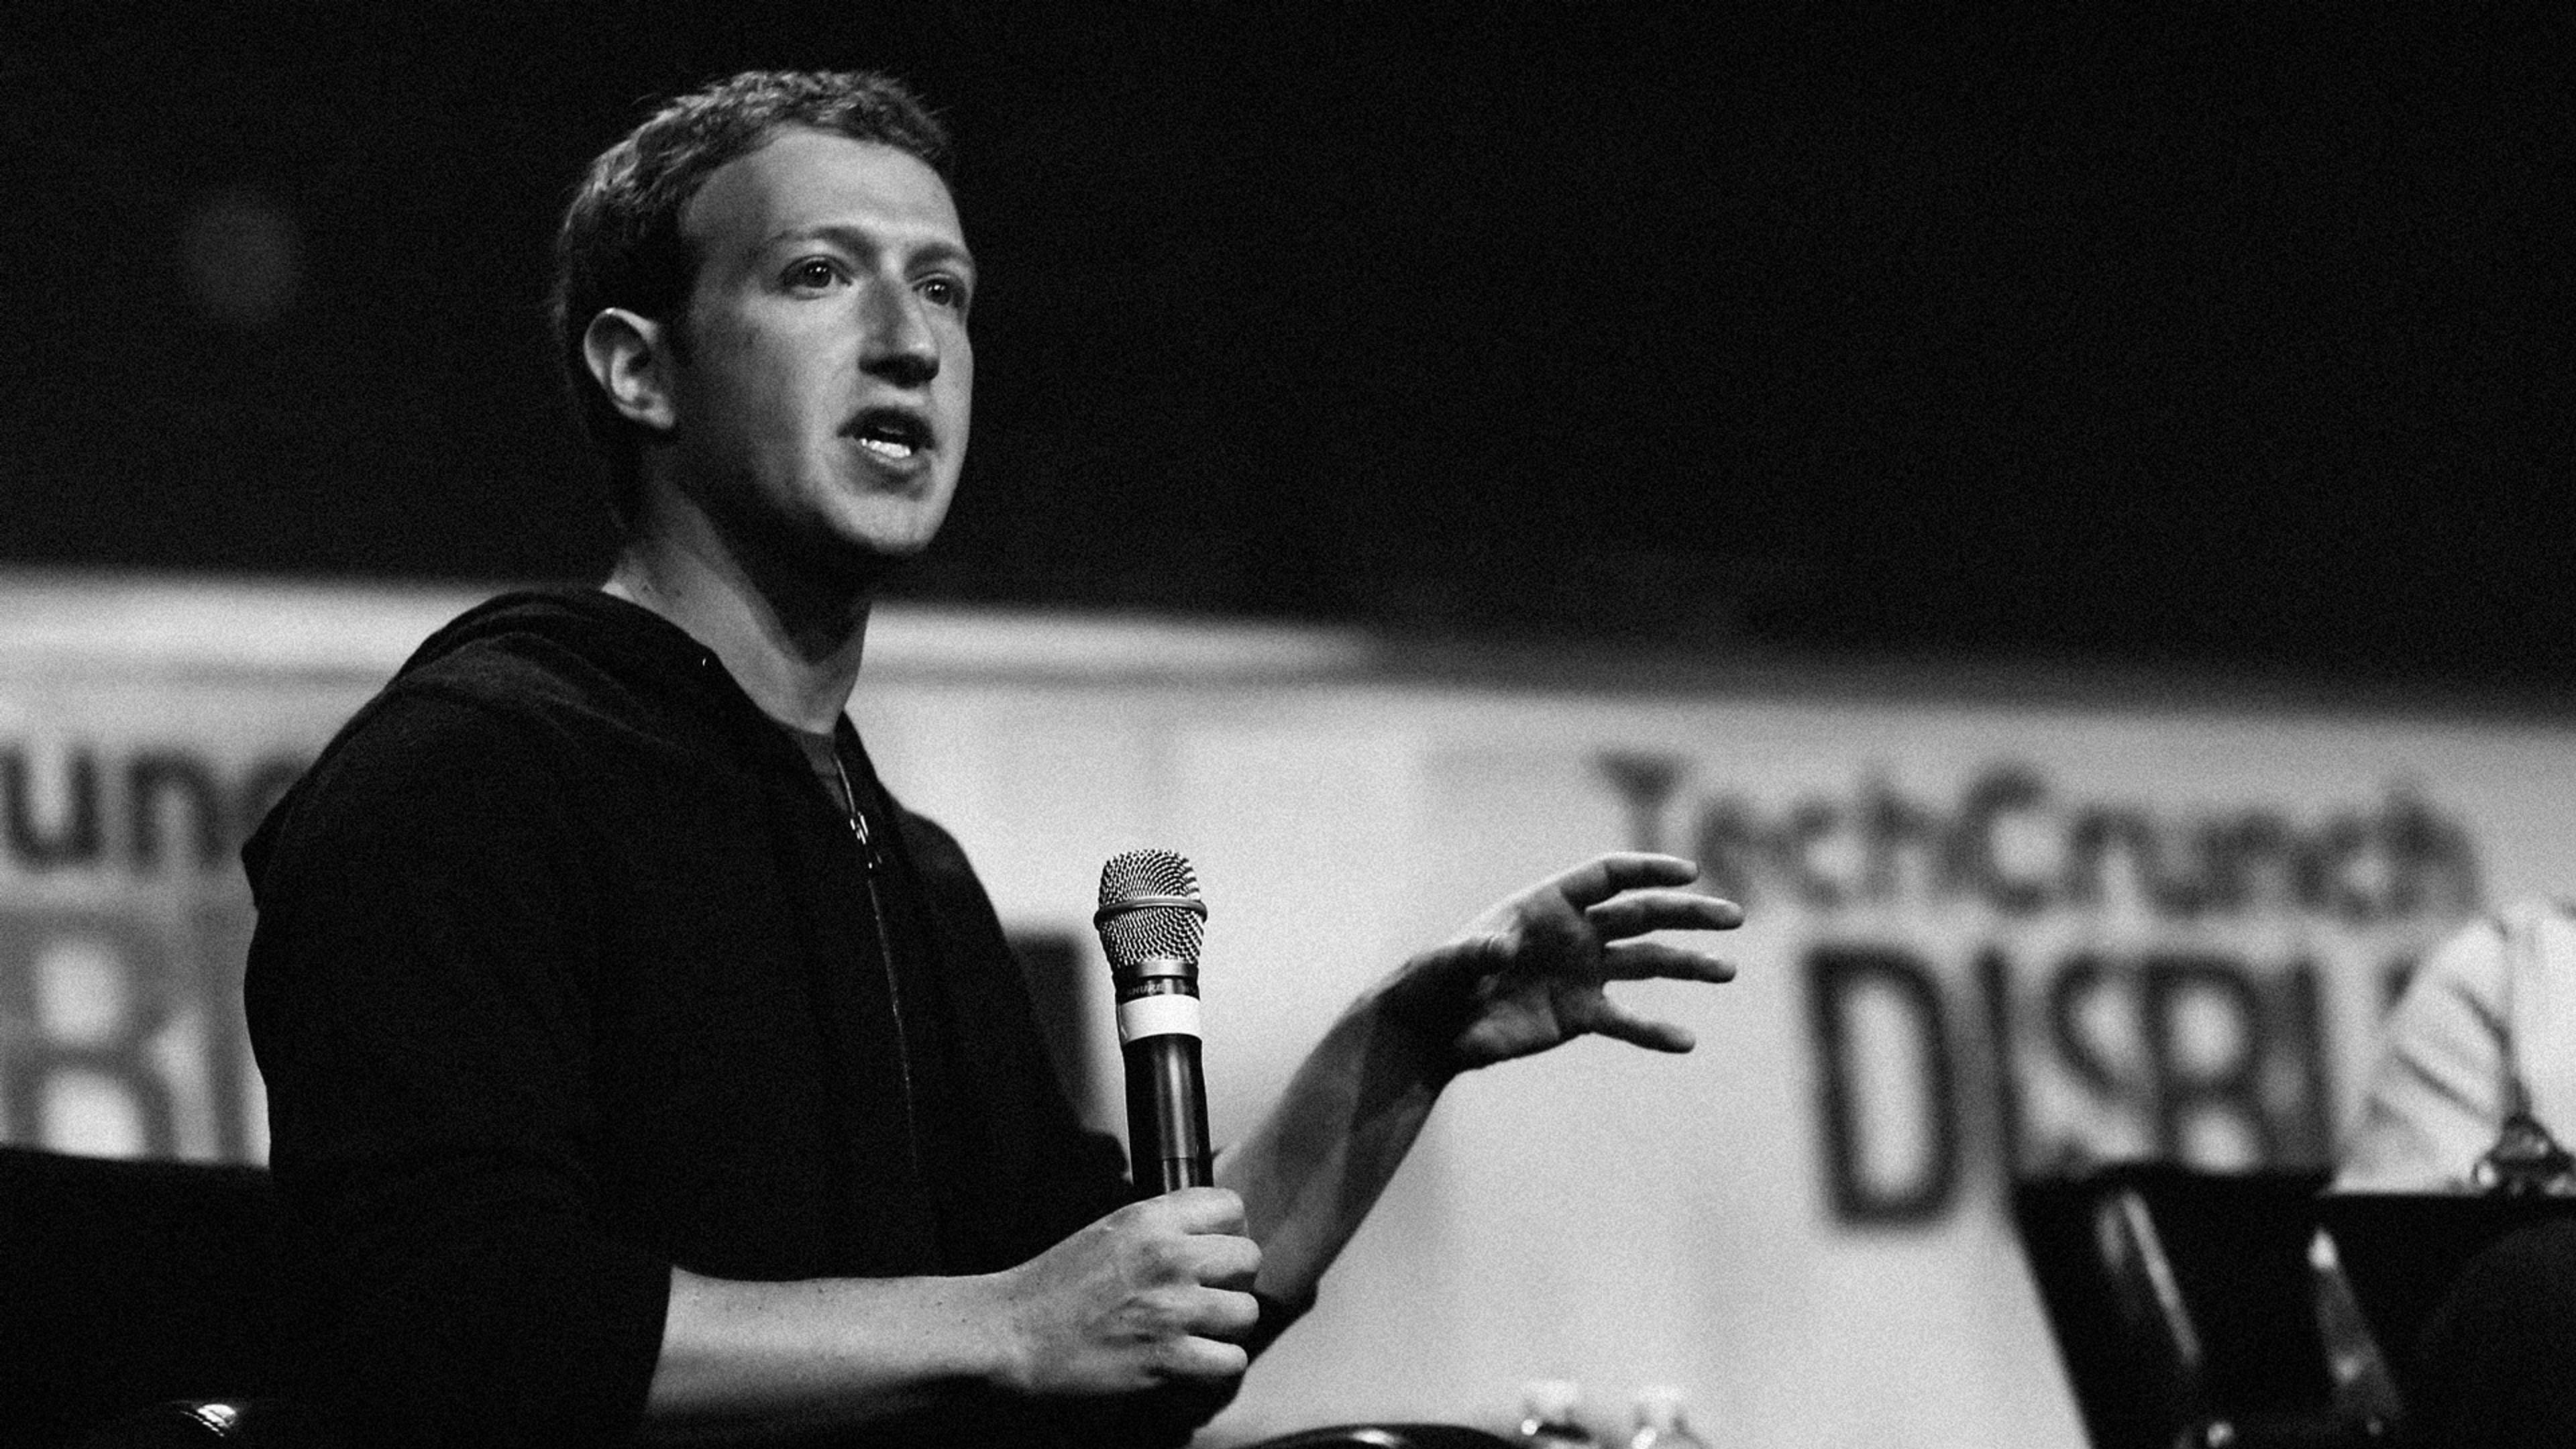 Mark Zuckerberg Congress live-stream: How to watch the Facebook CEO’s Senate testimony